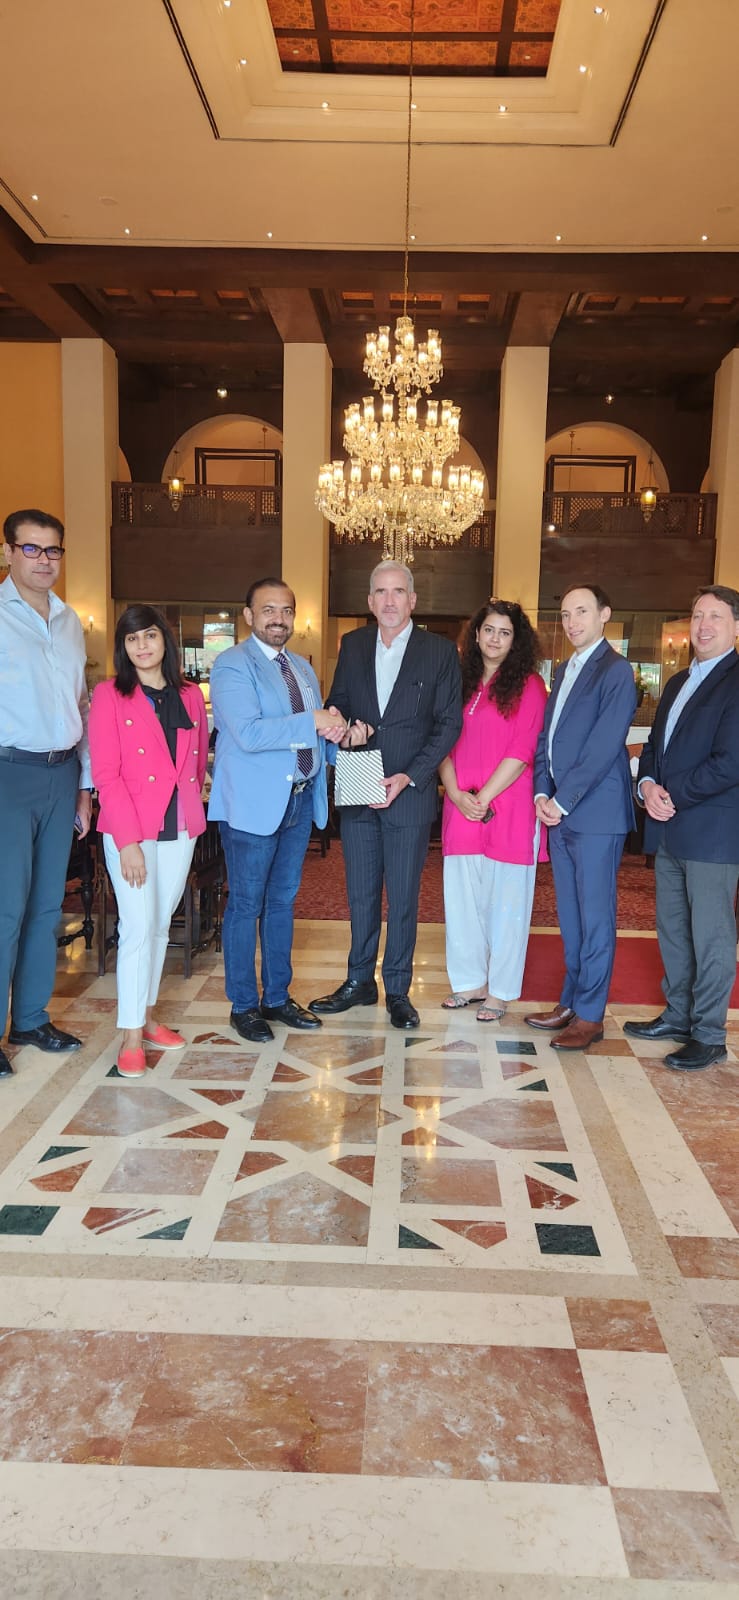 Coca-Cola Pakistan welcomes US diplomats John Letvin, Zachary Bailey to Pakistan